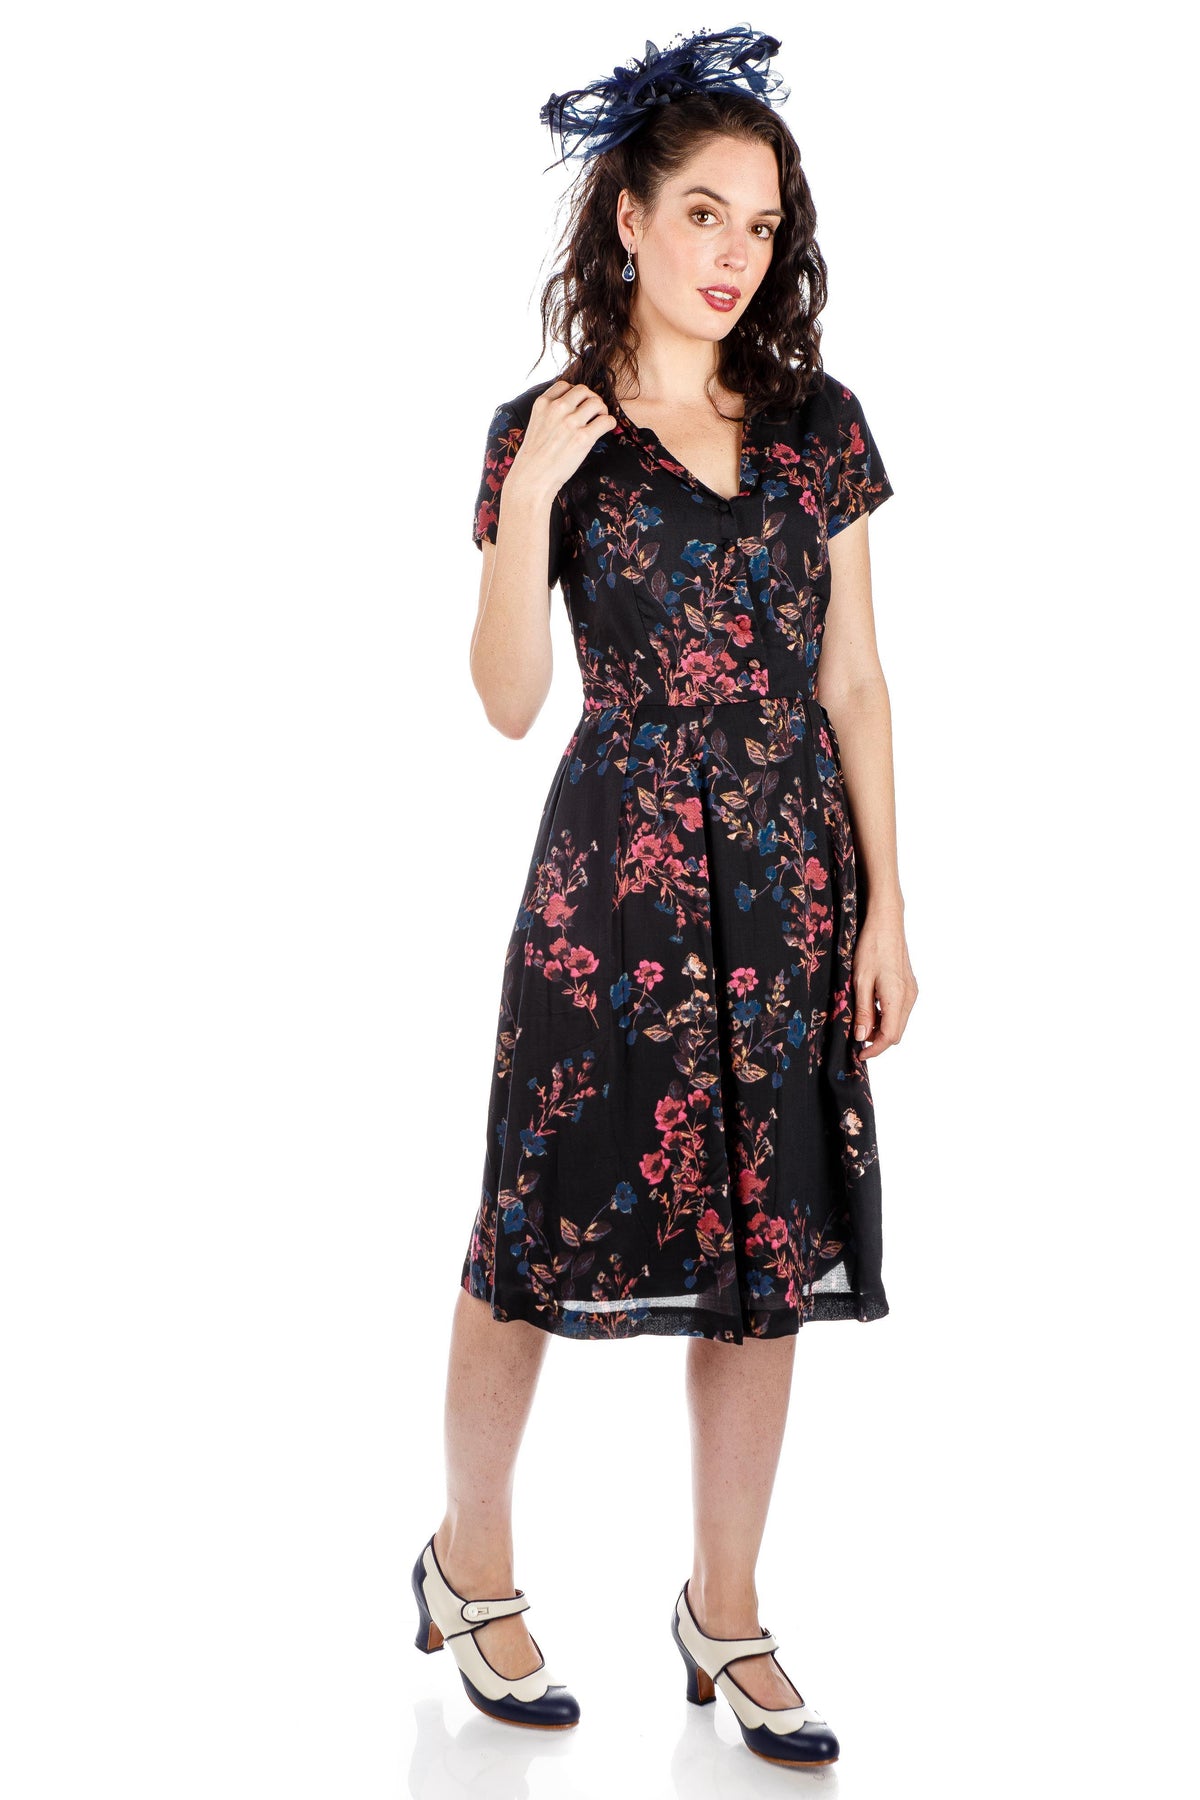 Hannigan Dress in Multi by Sheen Clothing – WardrobeShop